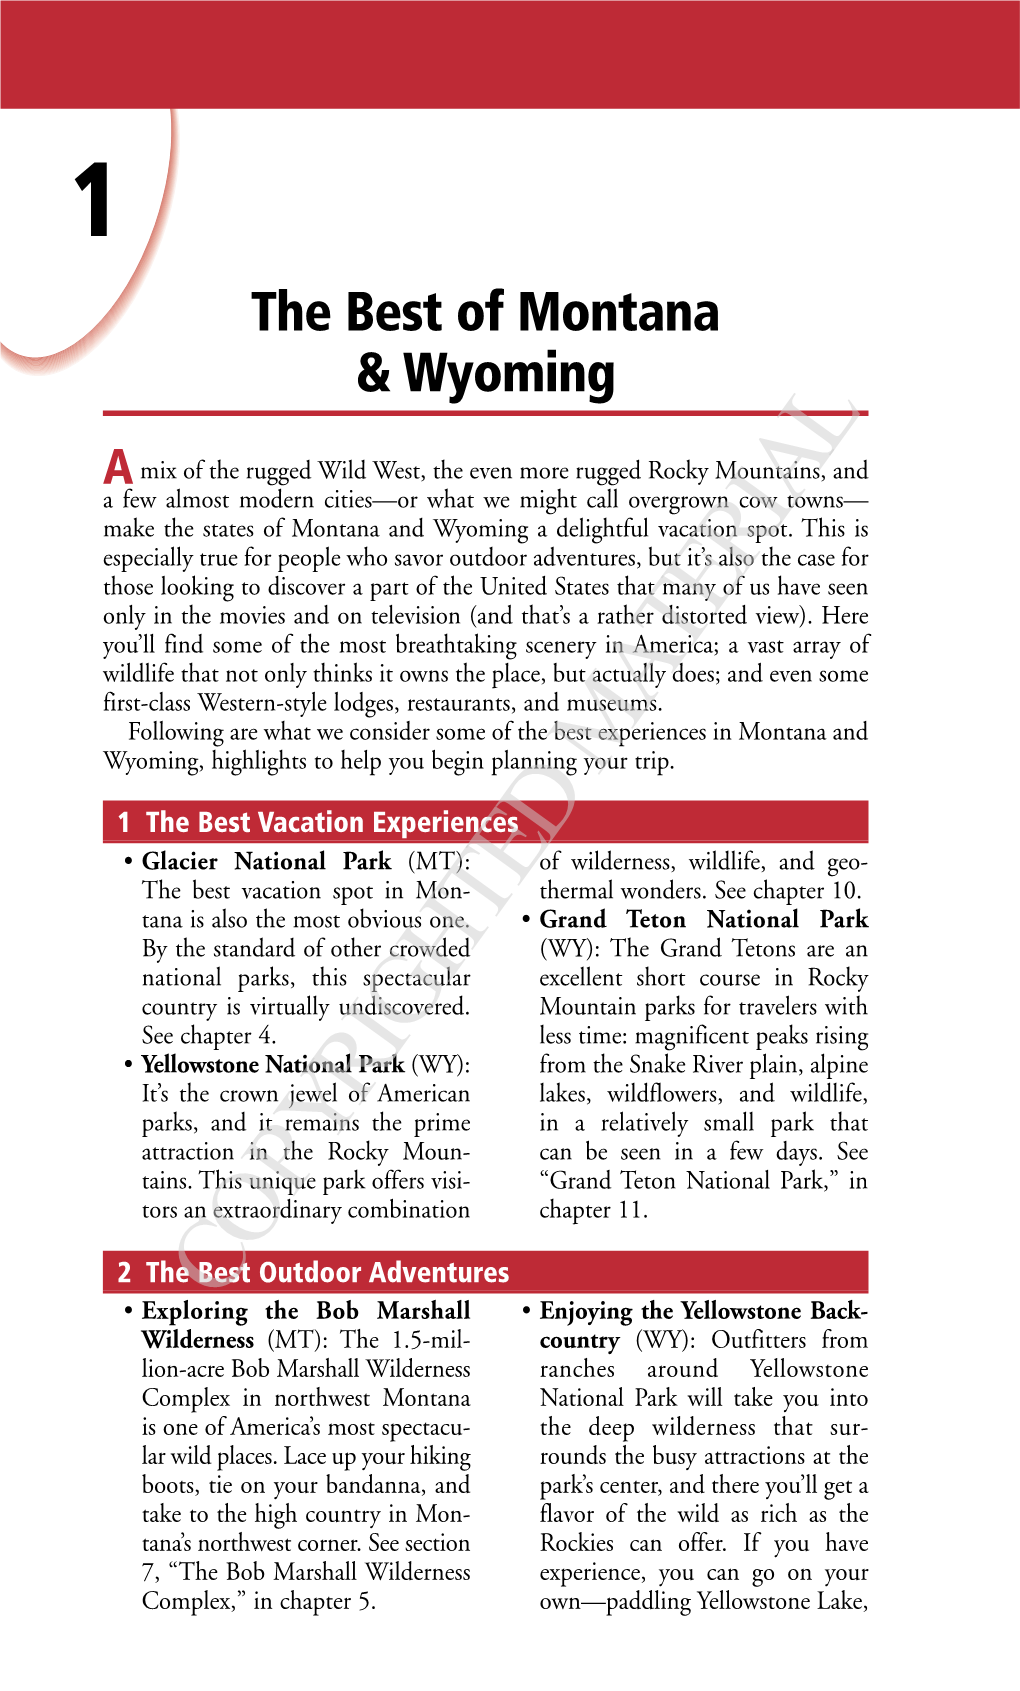 The Best of Montana & Wyoming